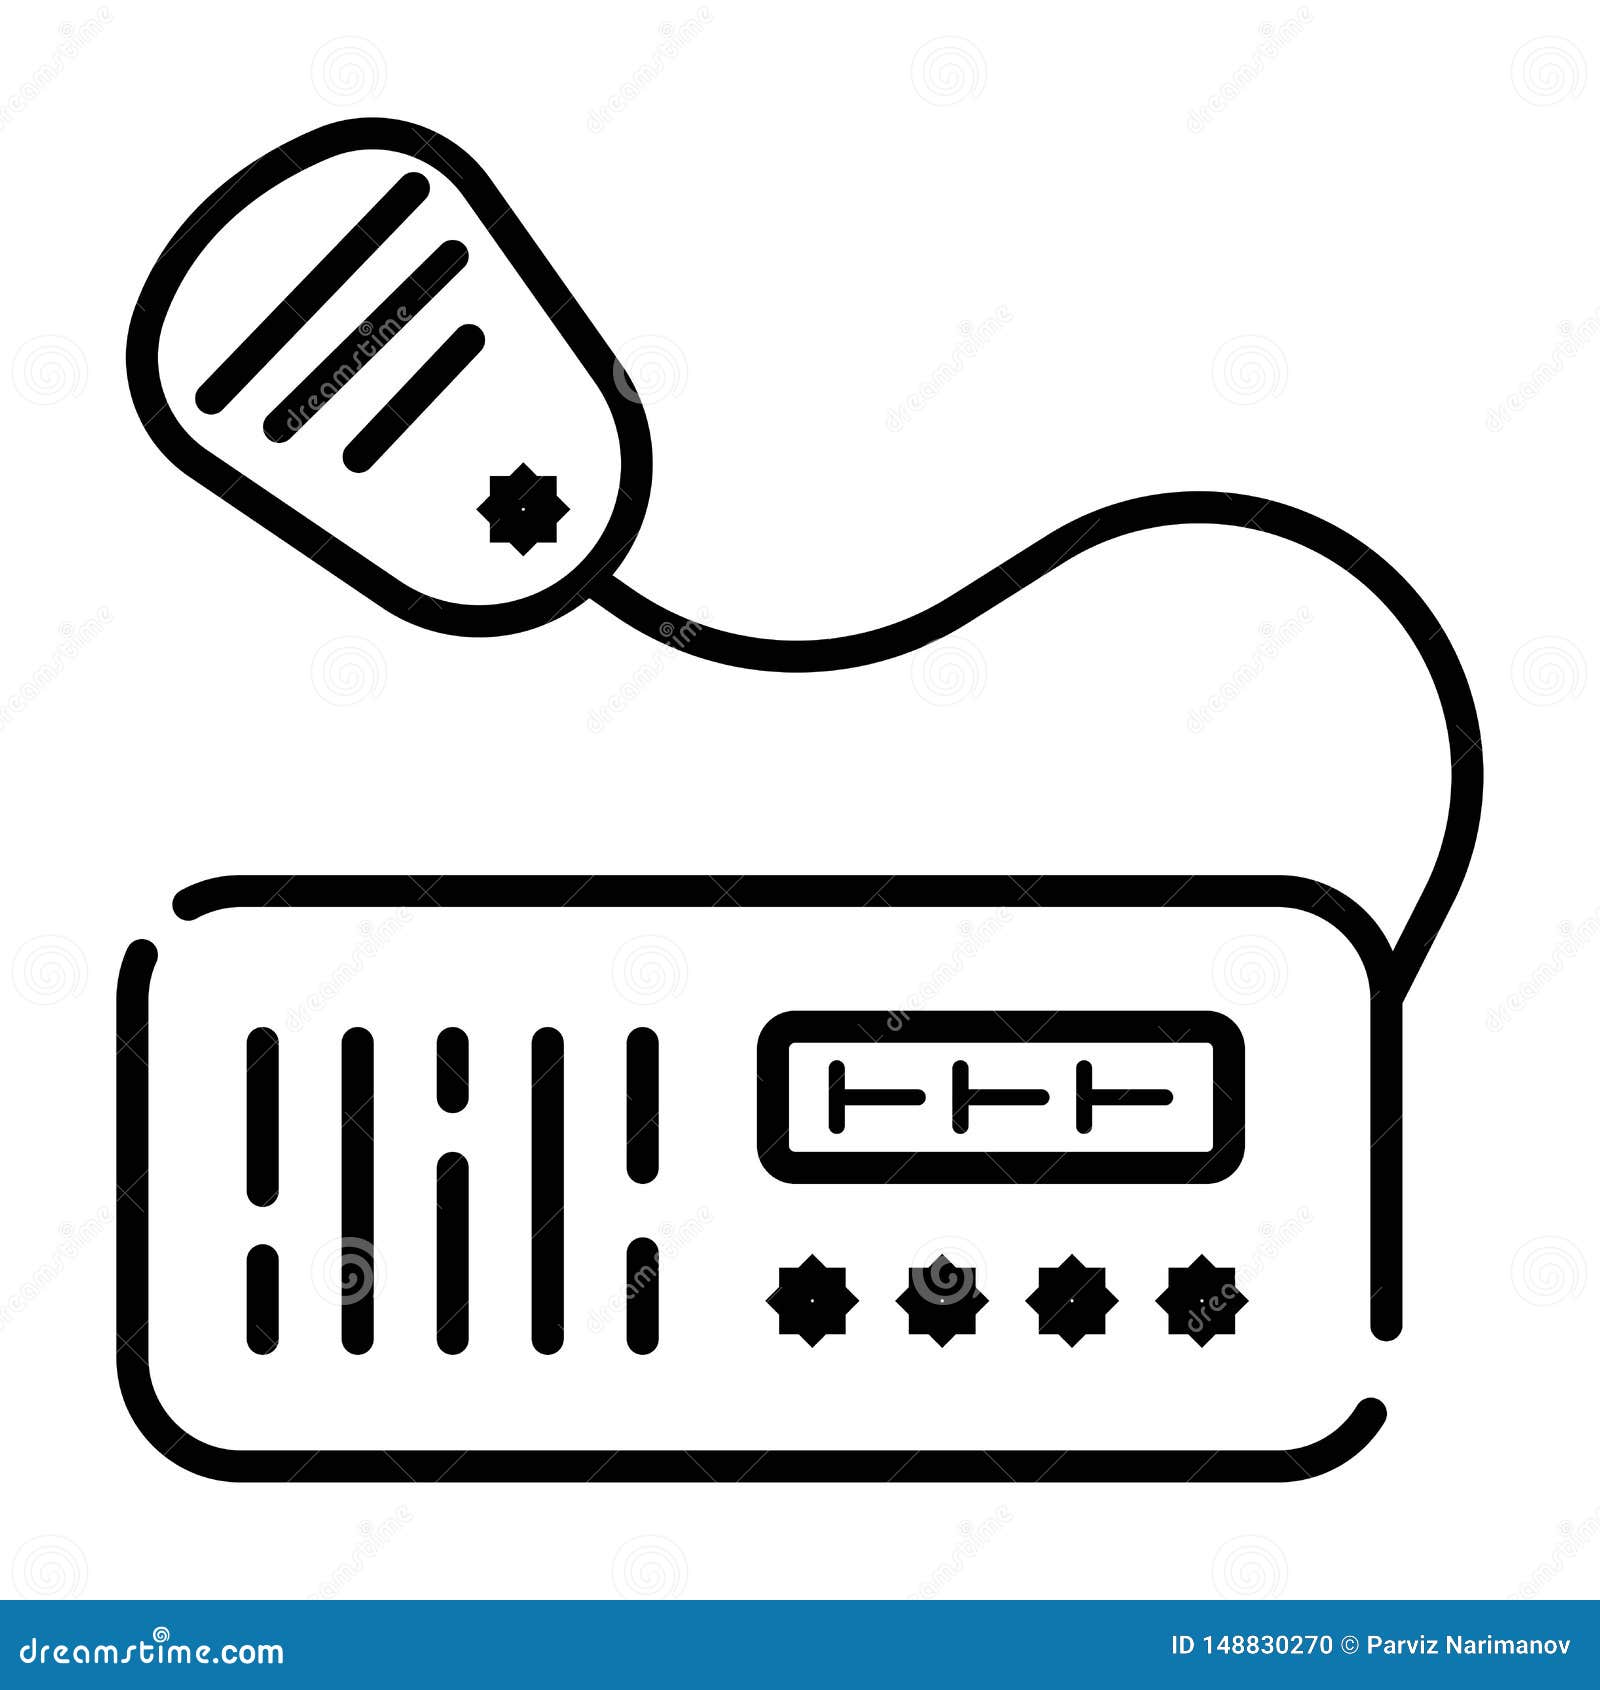 vhf radio transceiver icon 